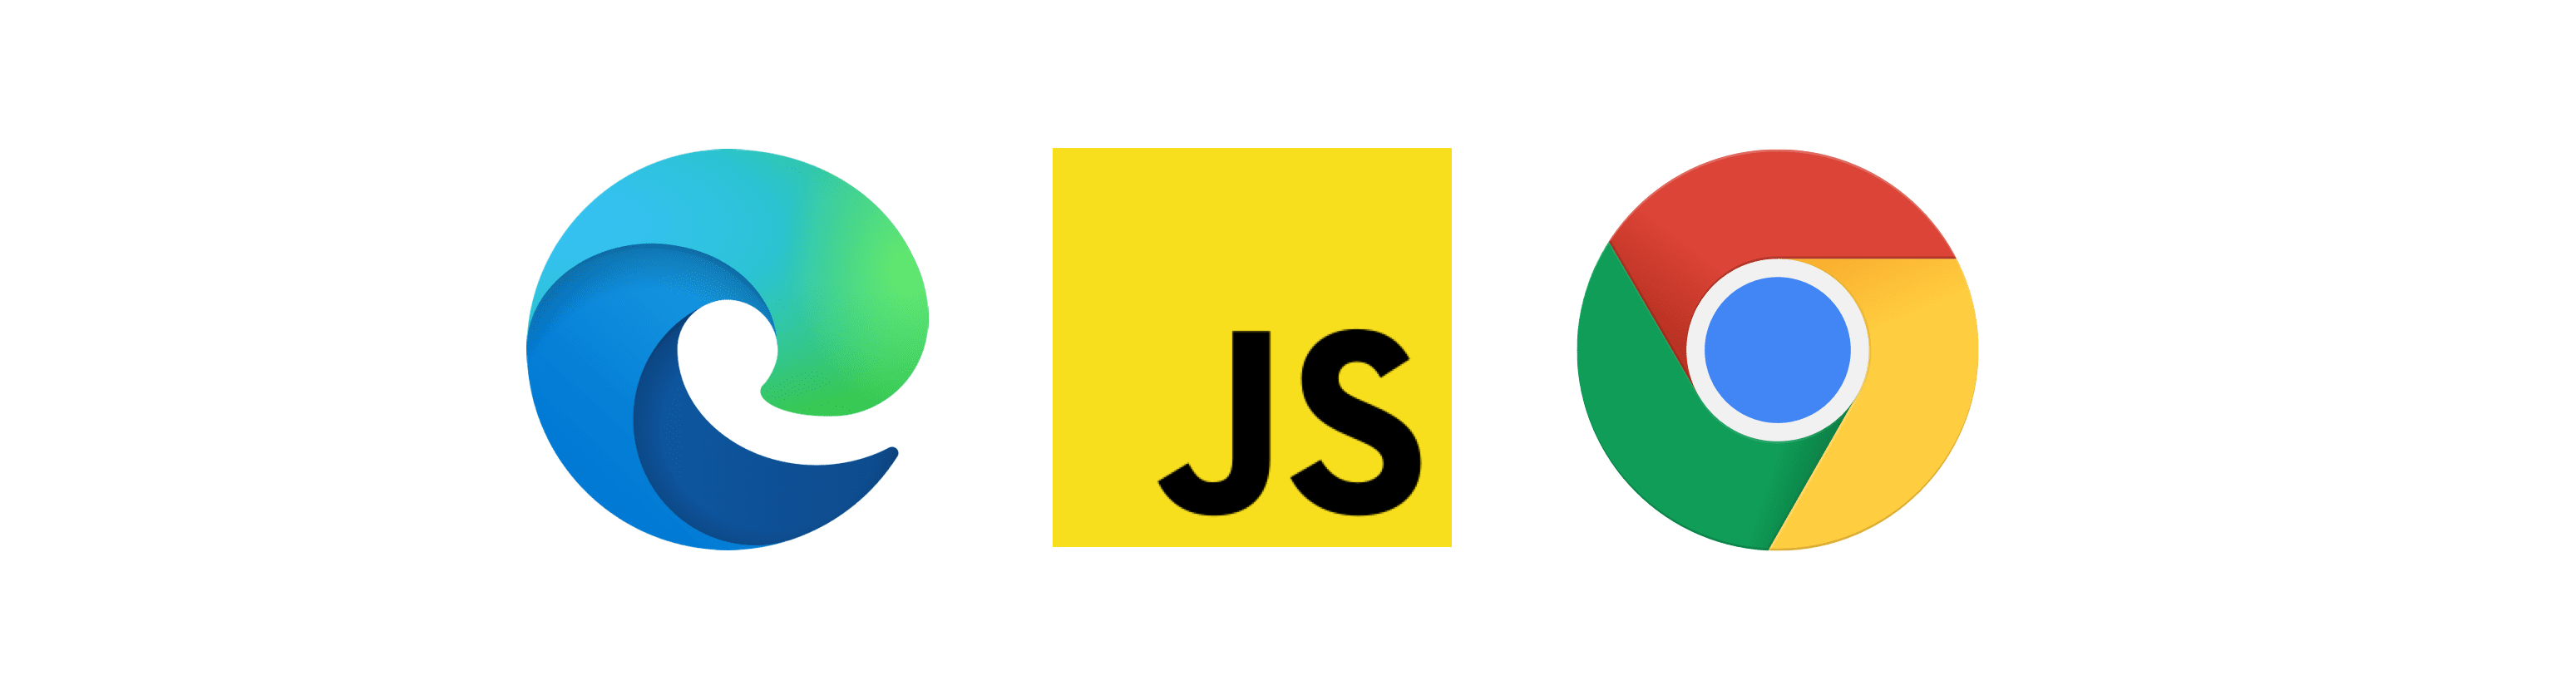 JavaScript, Edge, and Chrome logo